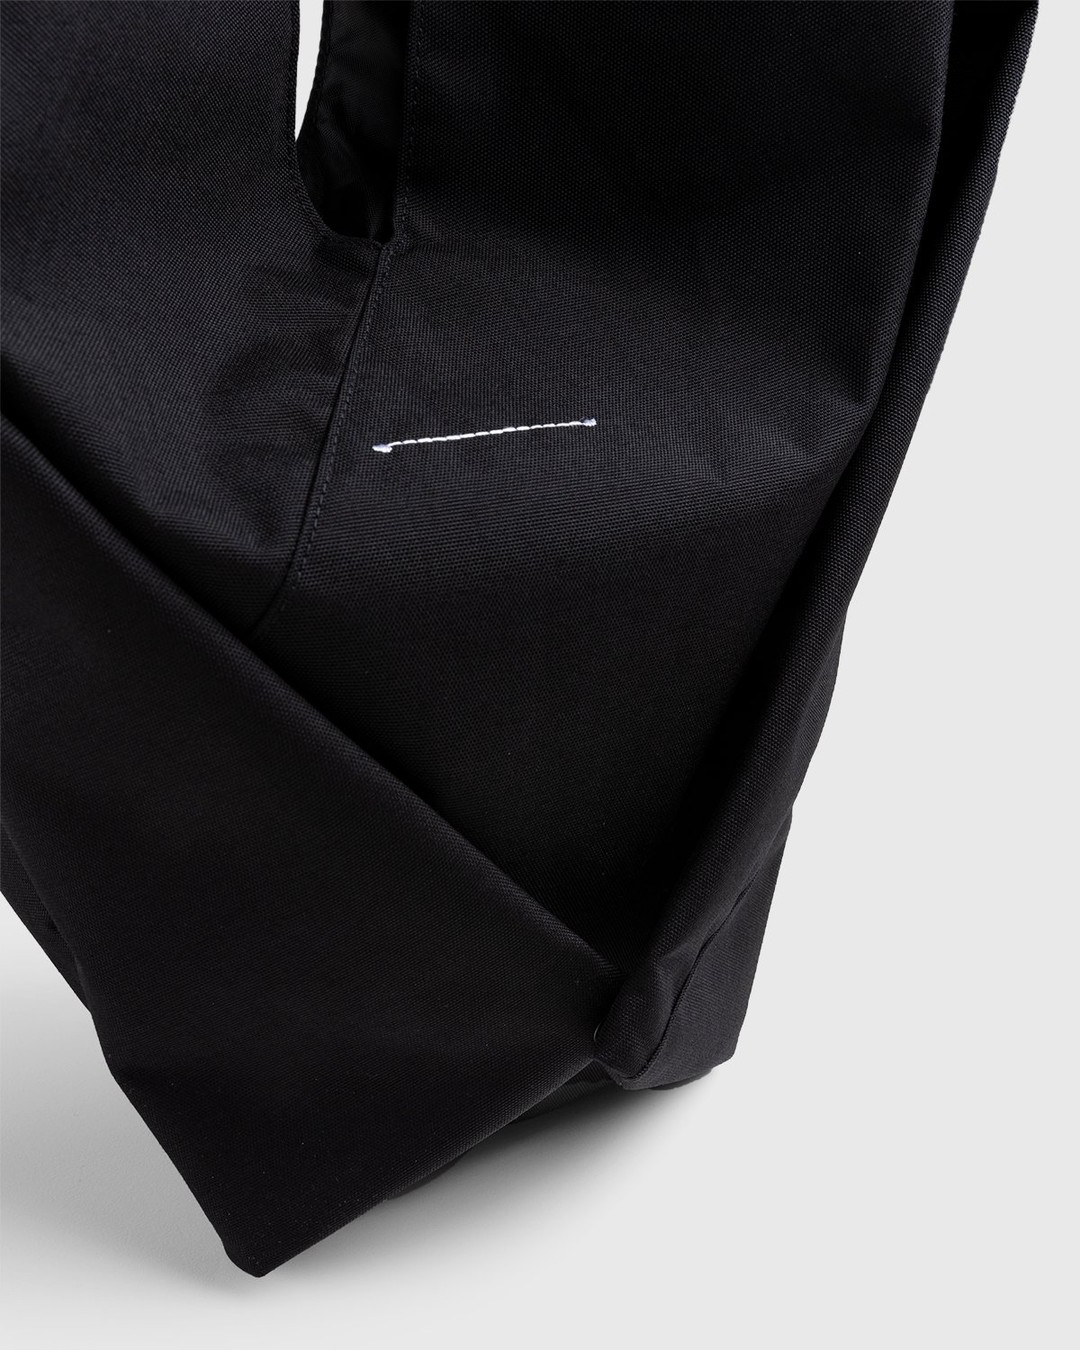 MM6 Maison Margiela x Eastpak – Borsa Shopping Bag Black - Shoulder Bags - Black - Image 5